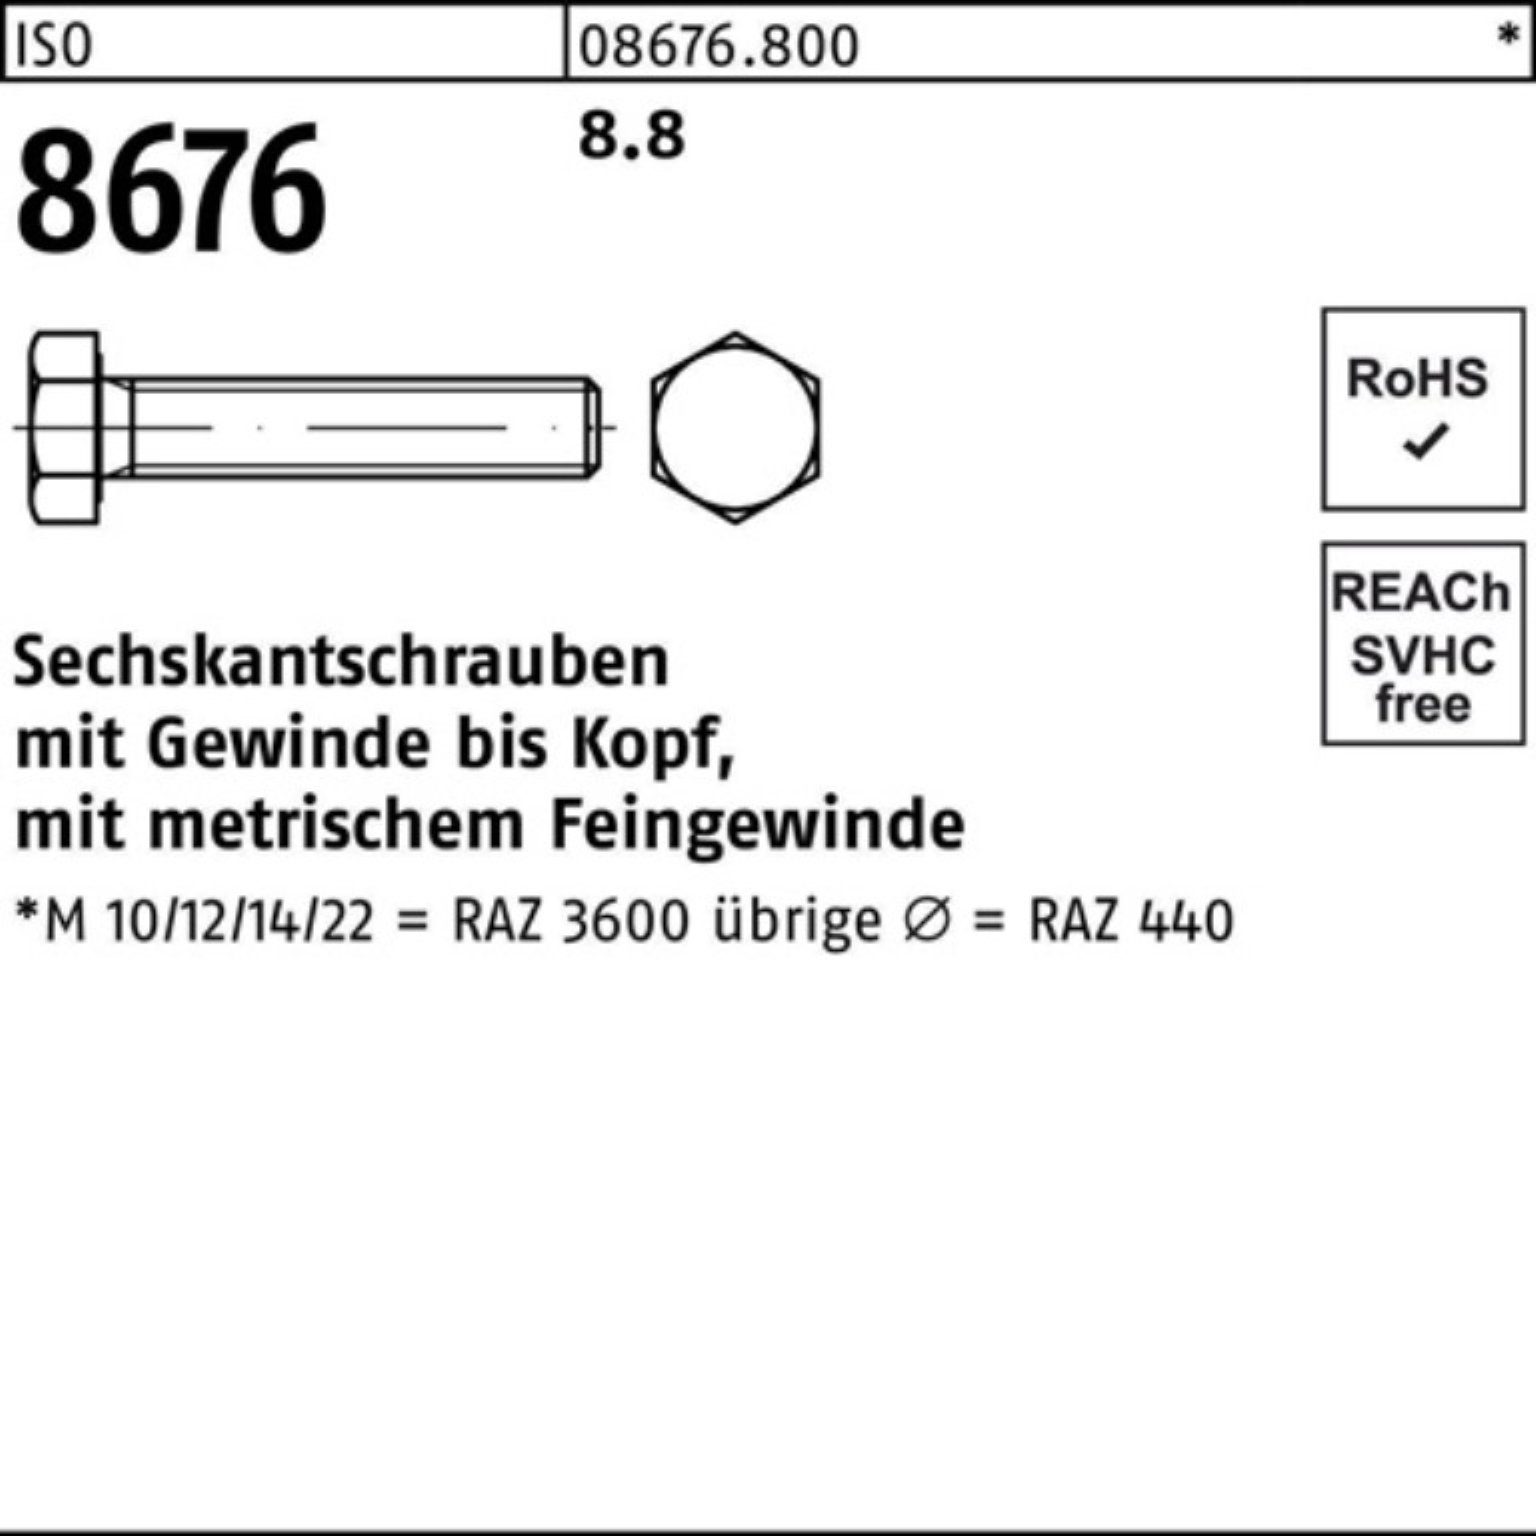 Reyher Sechskantschraube 100er Pack Sechskantschraube Stück 8.8 M8x1x 90 8676 ISO ISO 86 VG 50